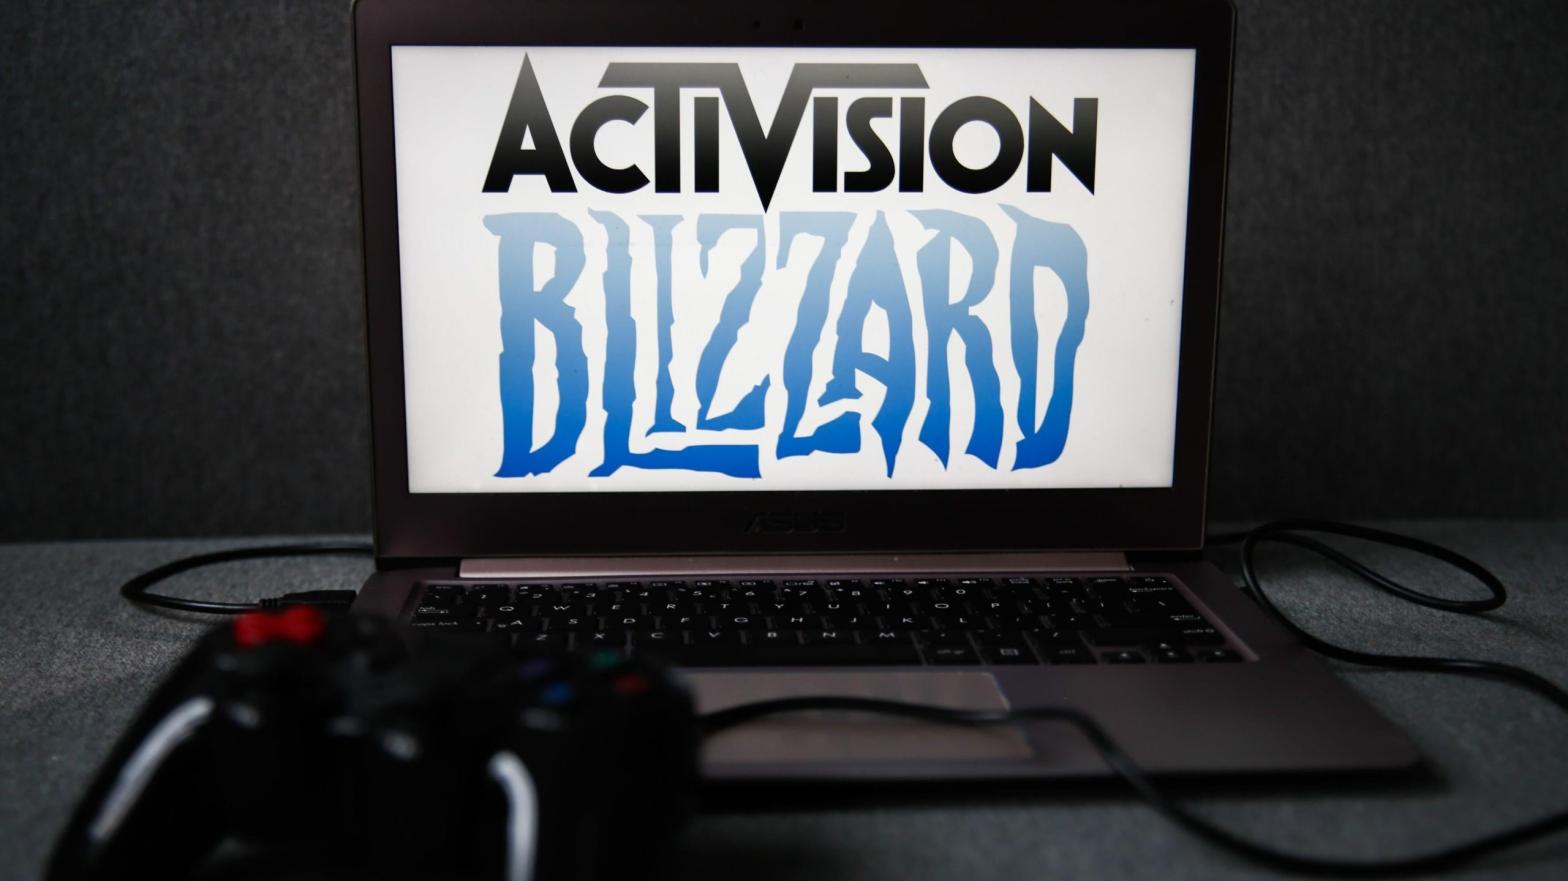 The Activision Blizzard logo, September 2021 photo illustration. (Photo: Jakub Porzycki/NurPhoto, Getty Images)